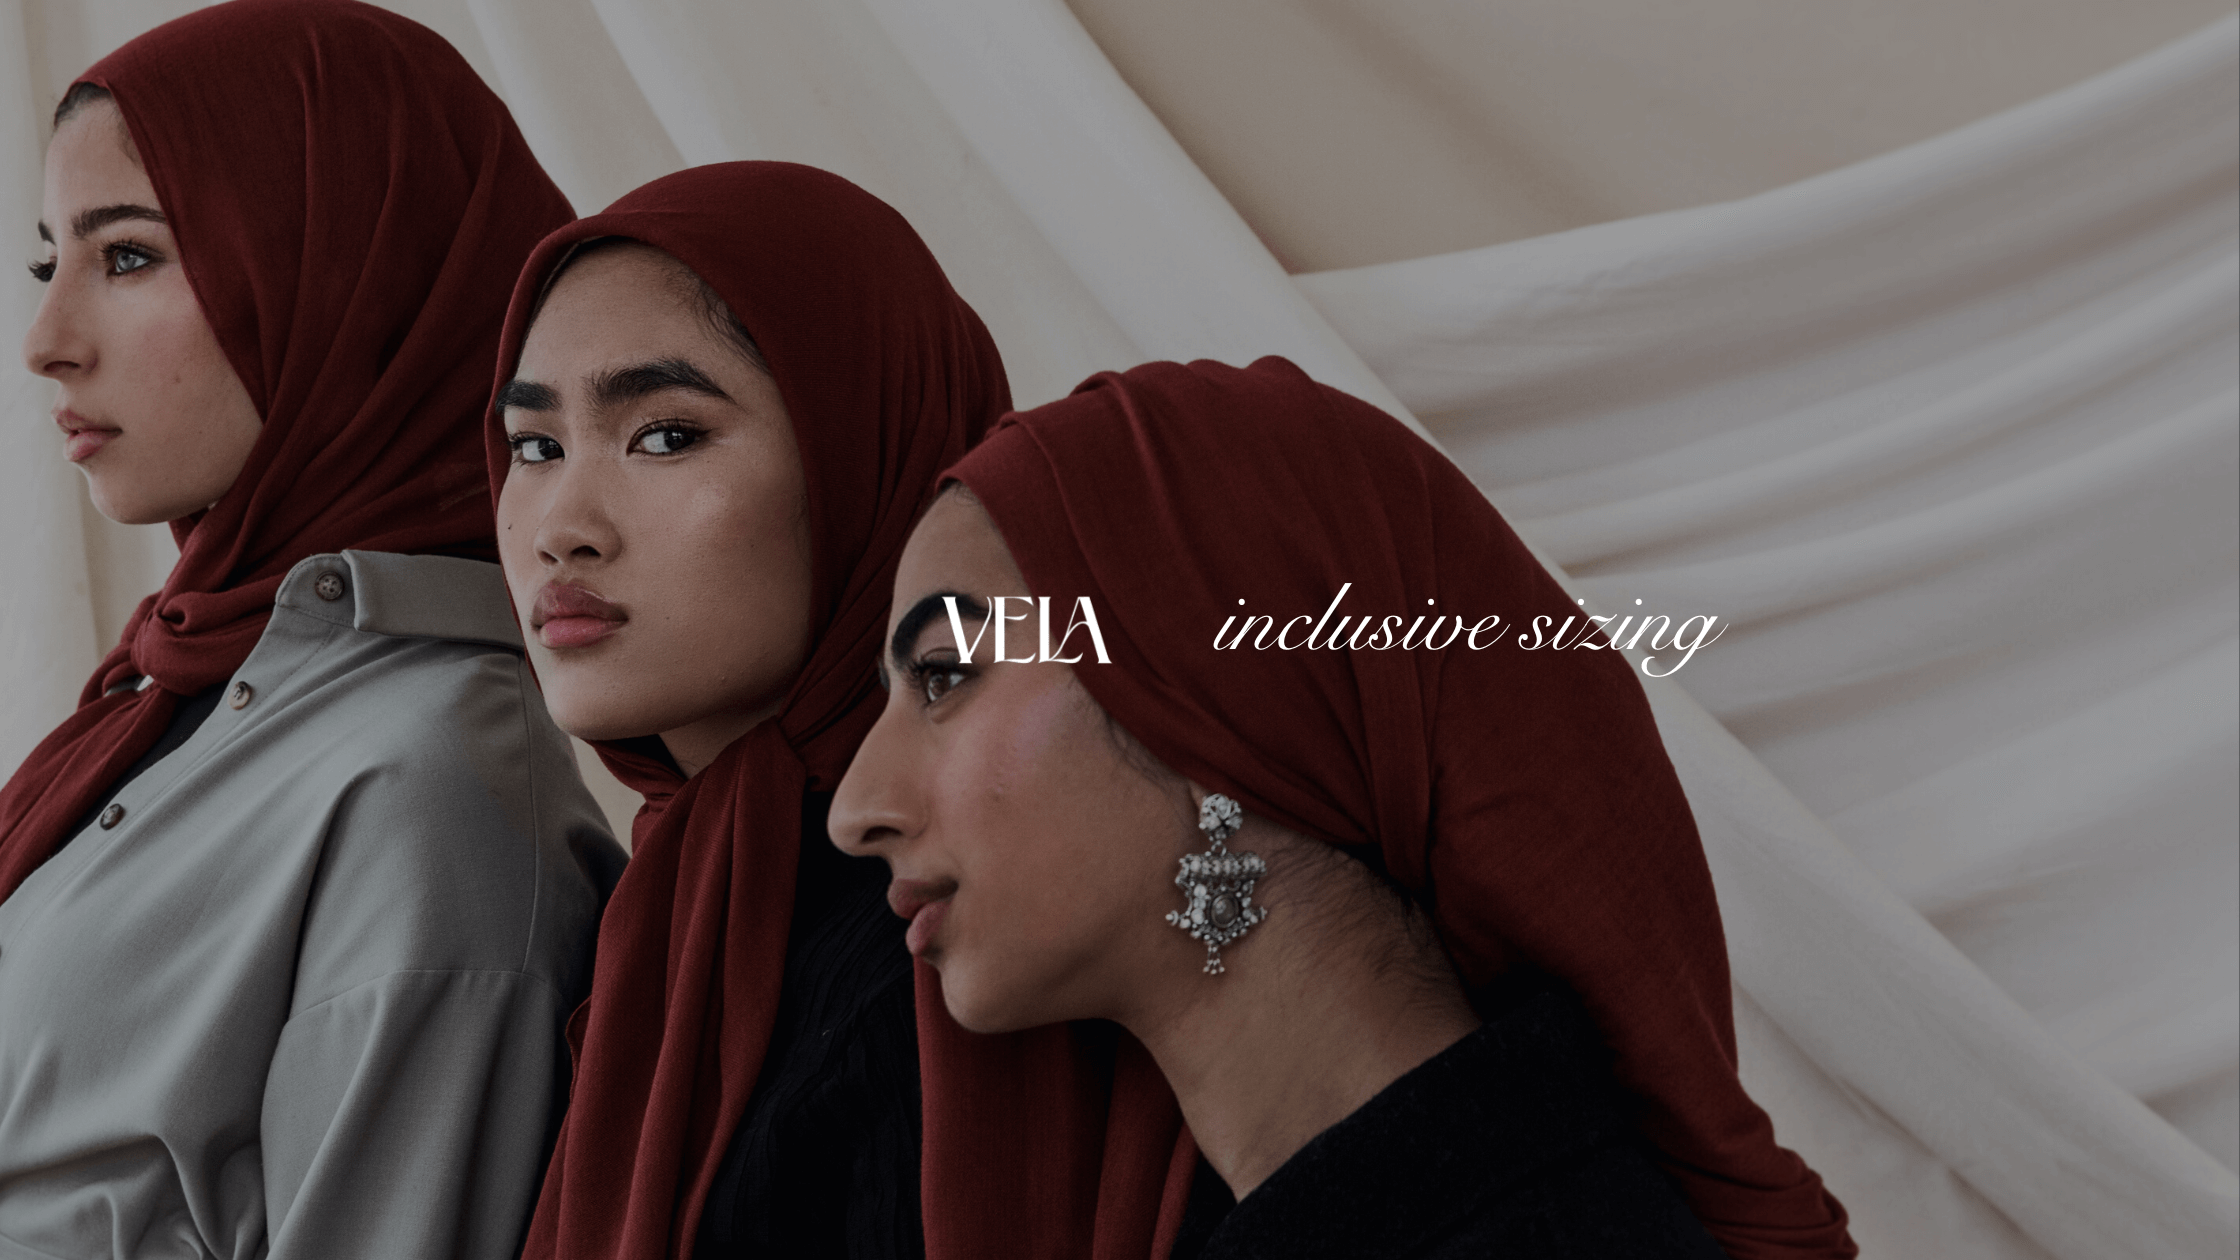 Hijab Sizes for Every Hijabi: Marwa Atik on Designing Inclusive Sizing